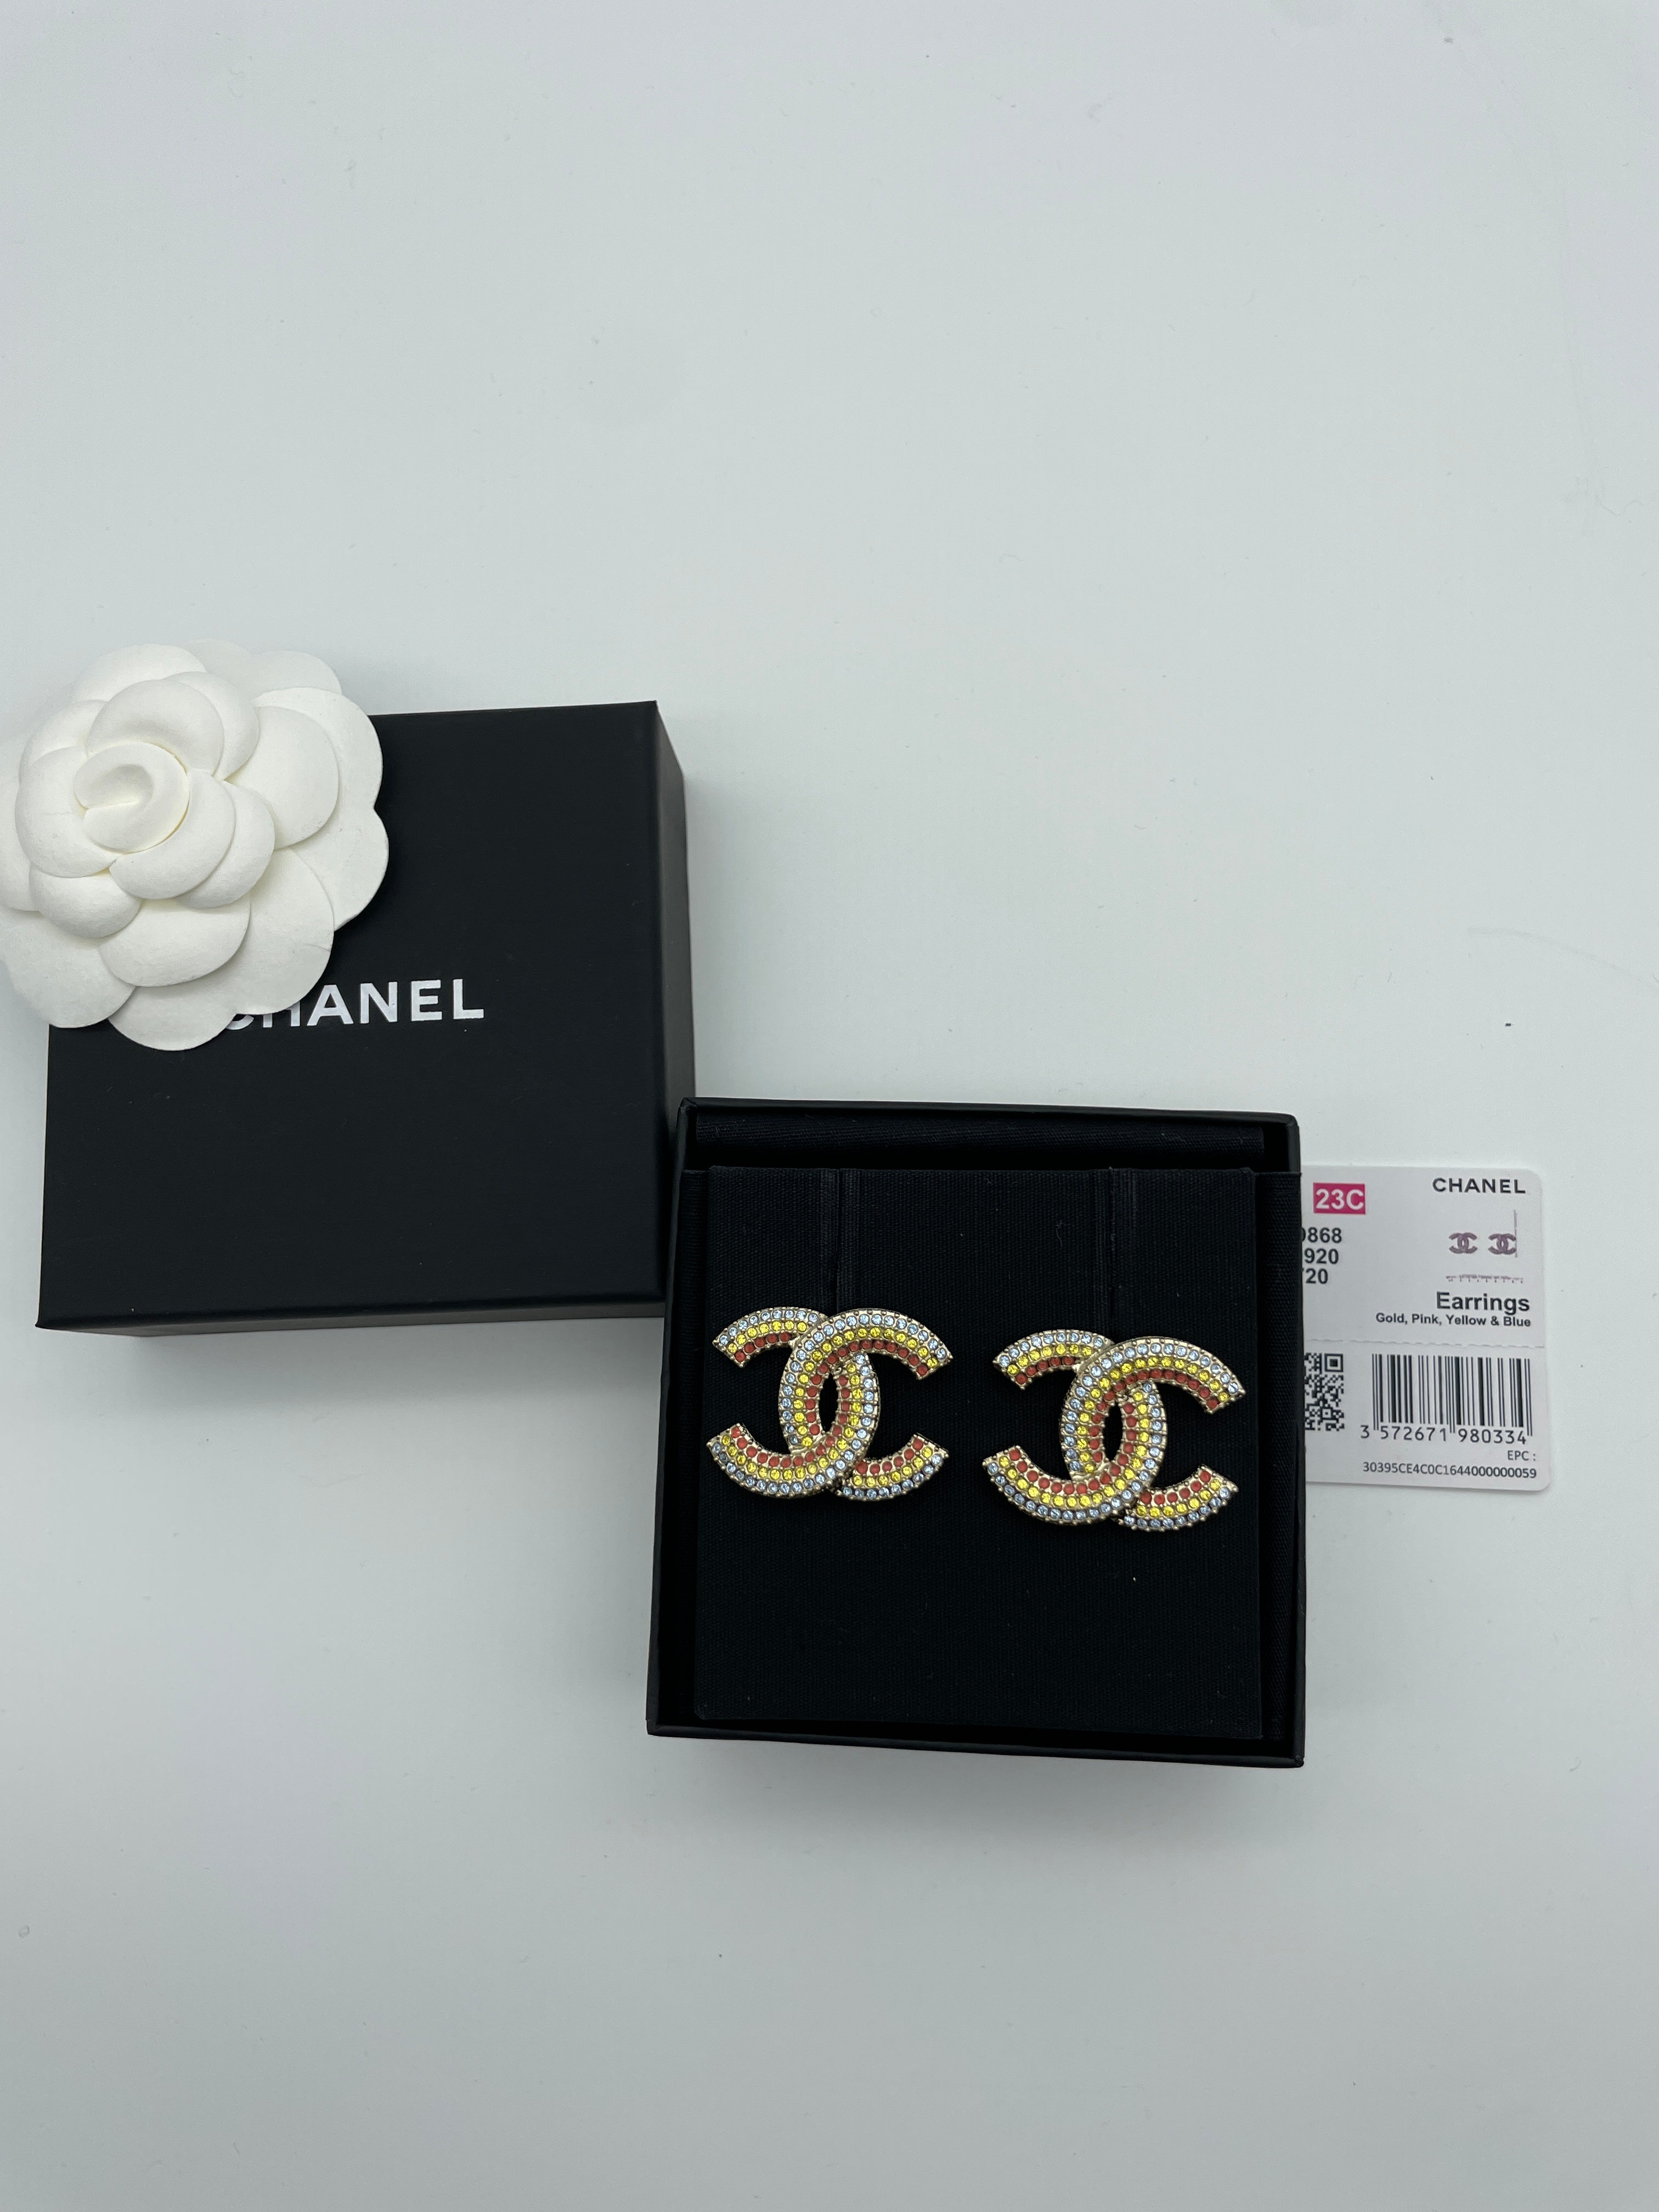 Chanel 23c gold crystal - Gem